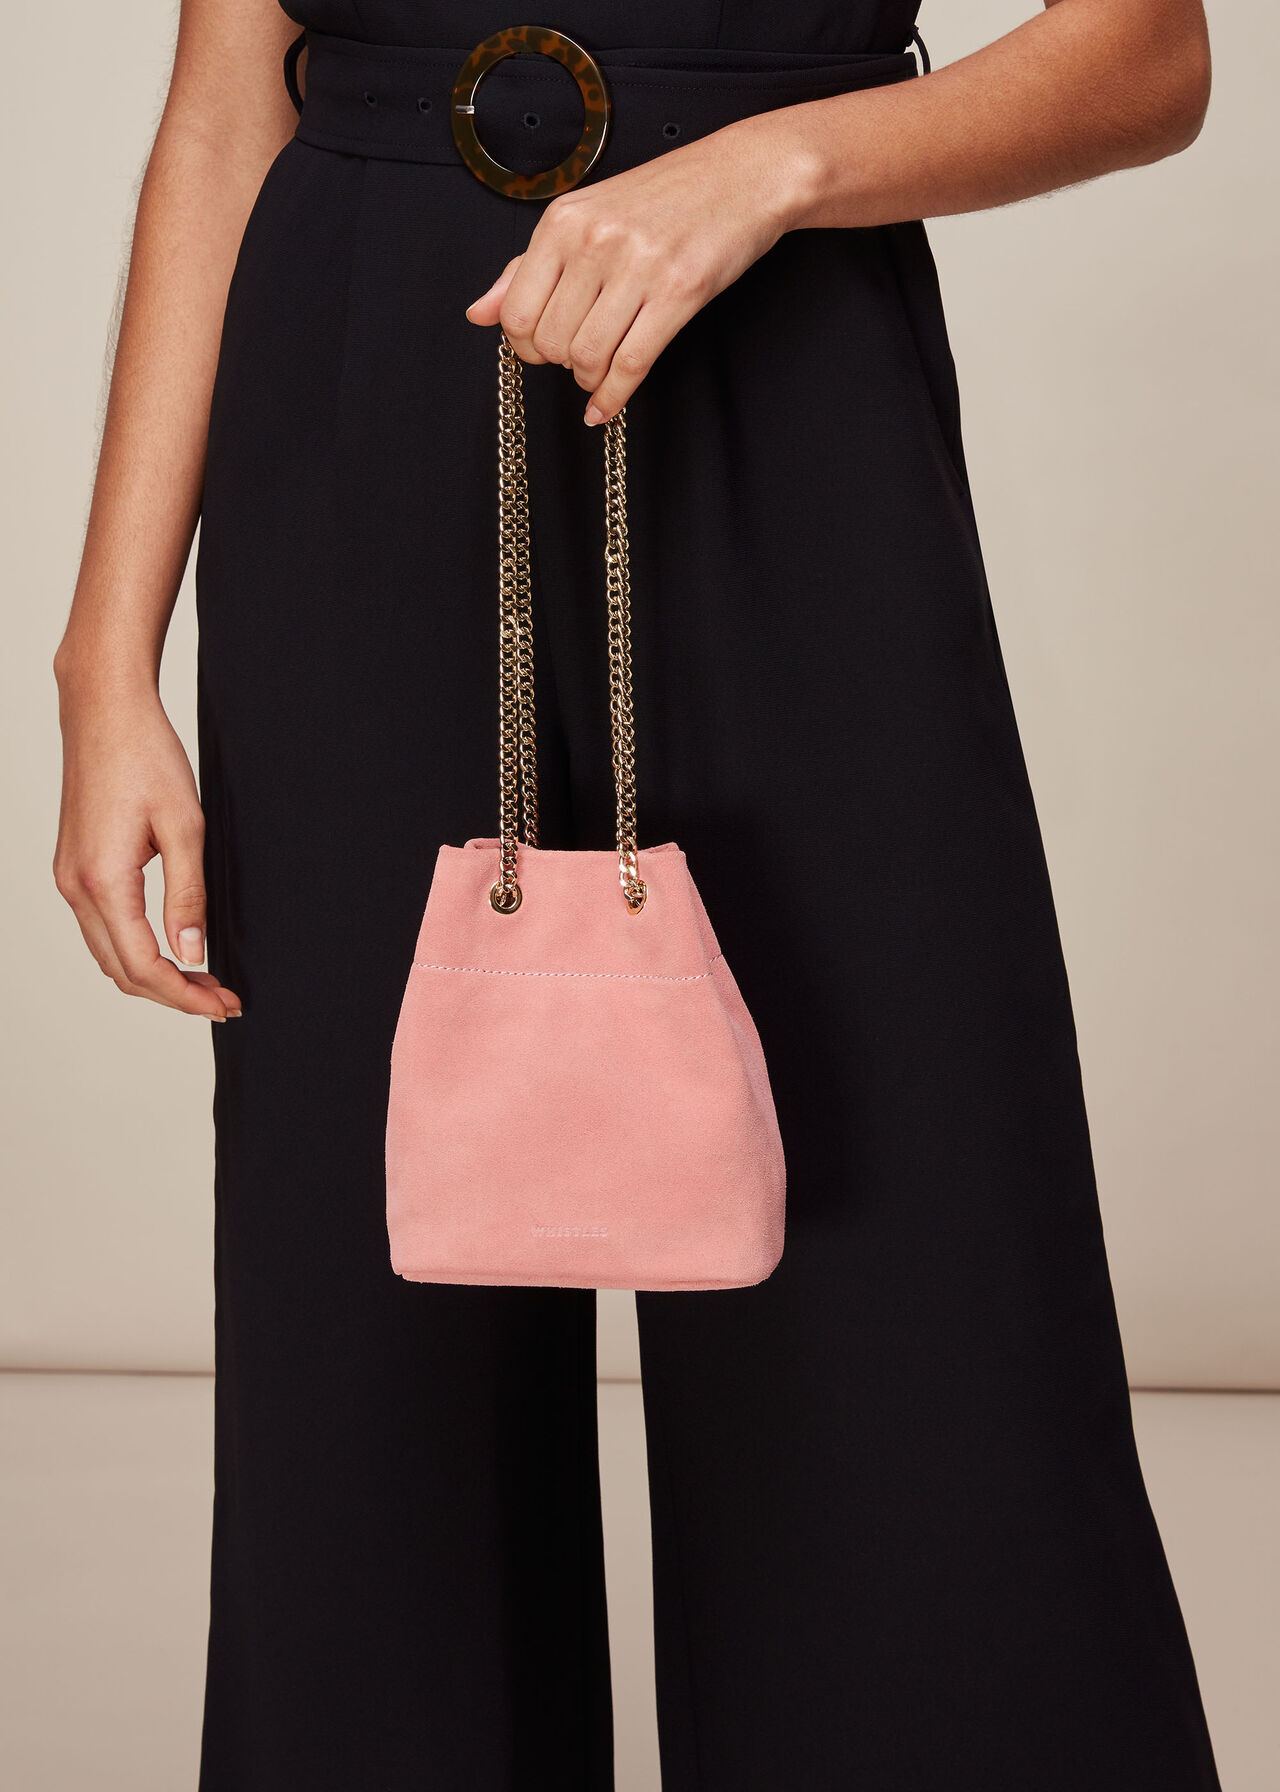 Ivy Chain Drawstring Bag Pink